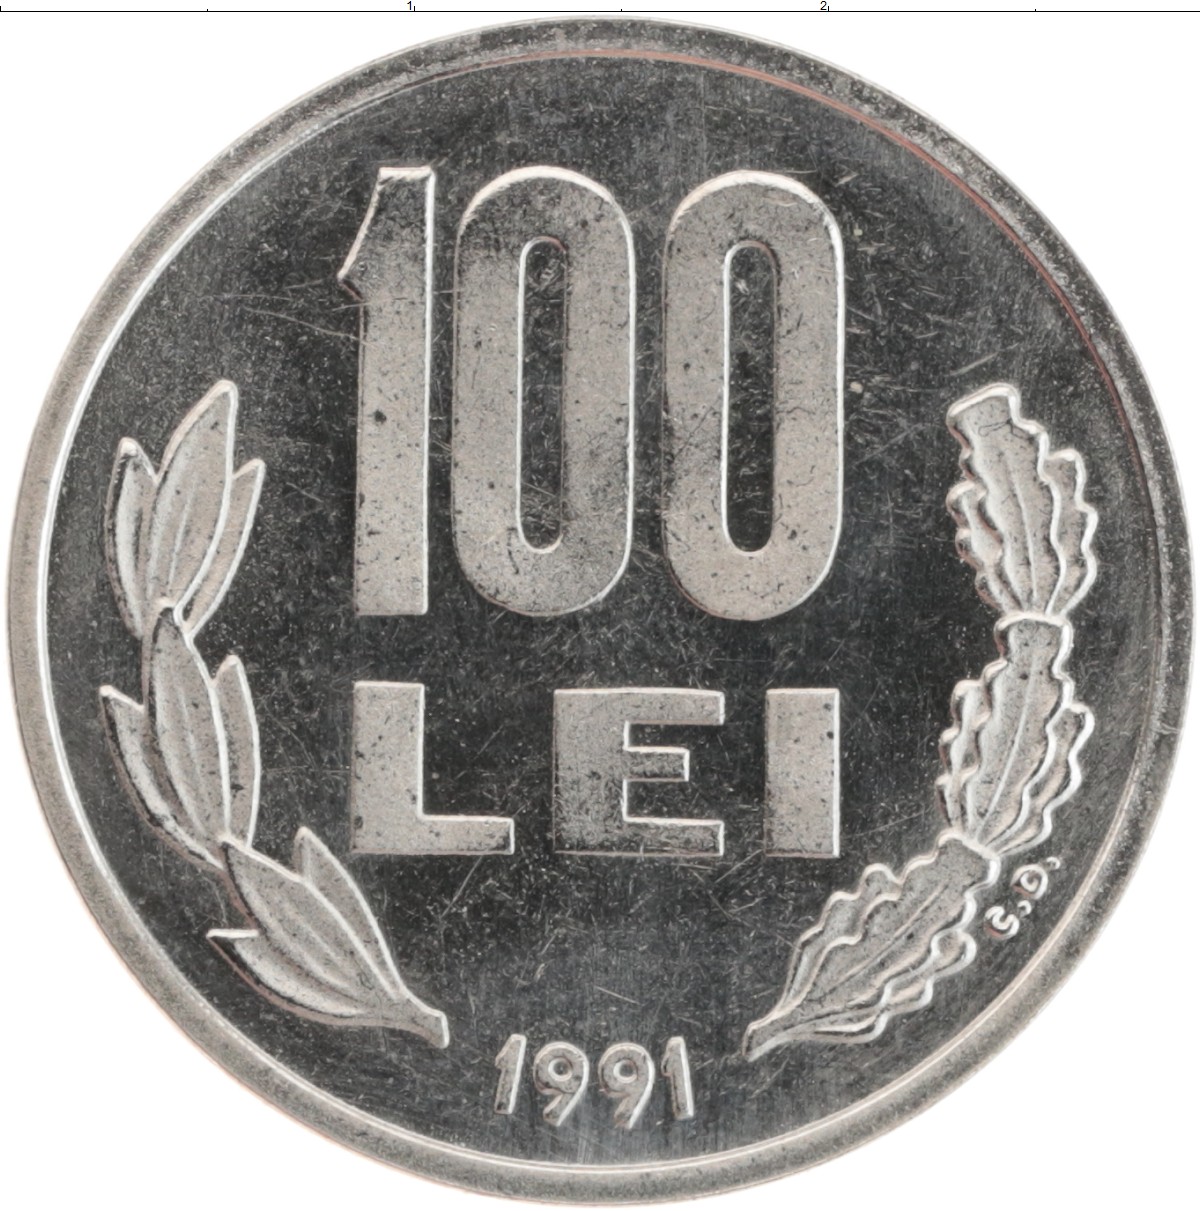 65 лей в рублях. Монета 100 Lei. 100 Румынских лей монета. Румынский лей знак. Румыния 1991.